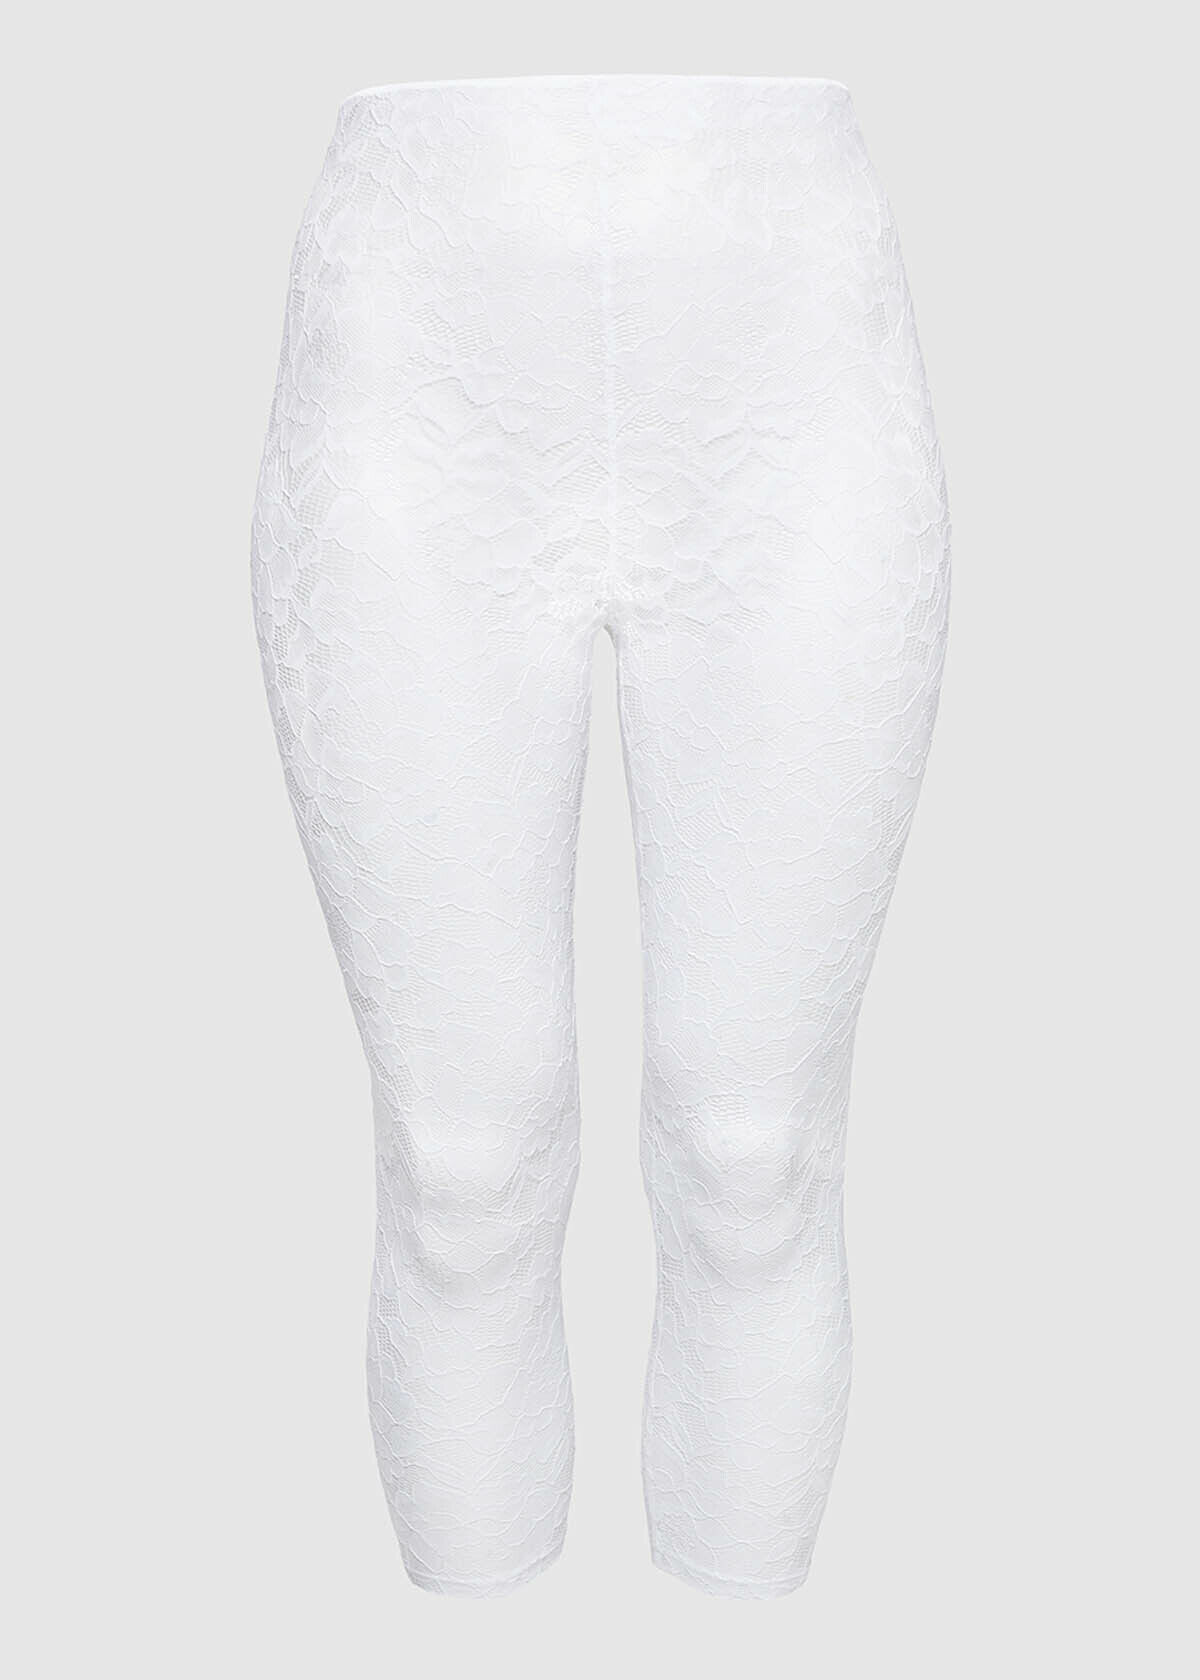 Post girl official white lace leggings brand new in... - Depop